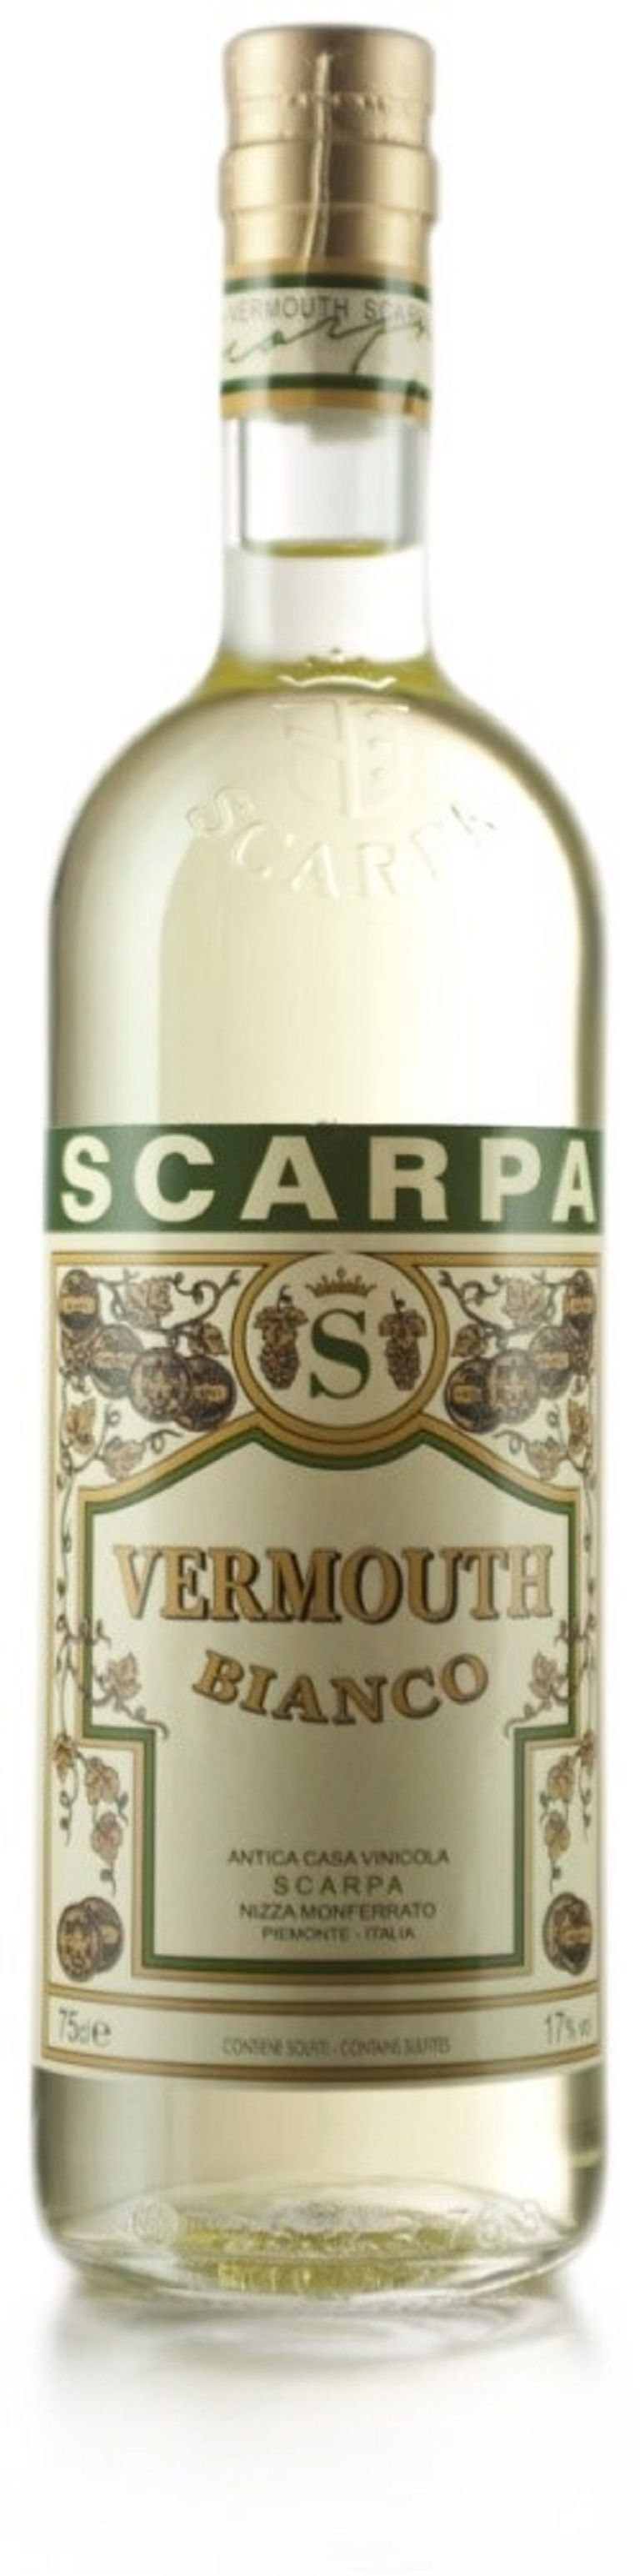 Vermouth Bianco